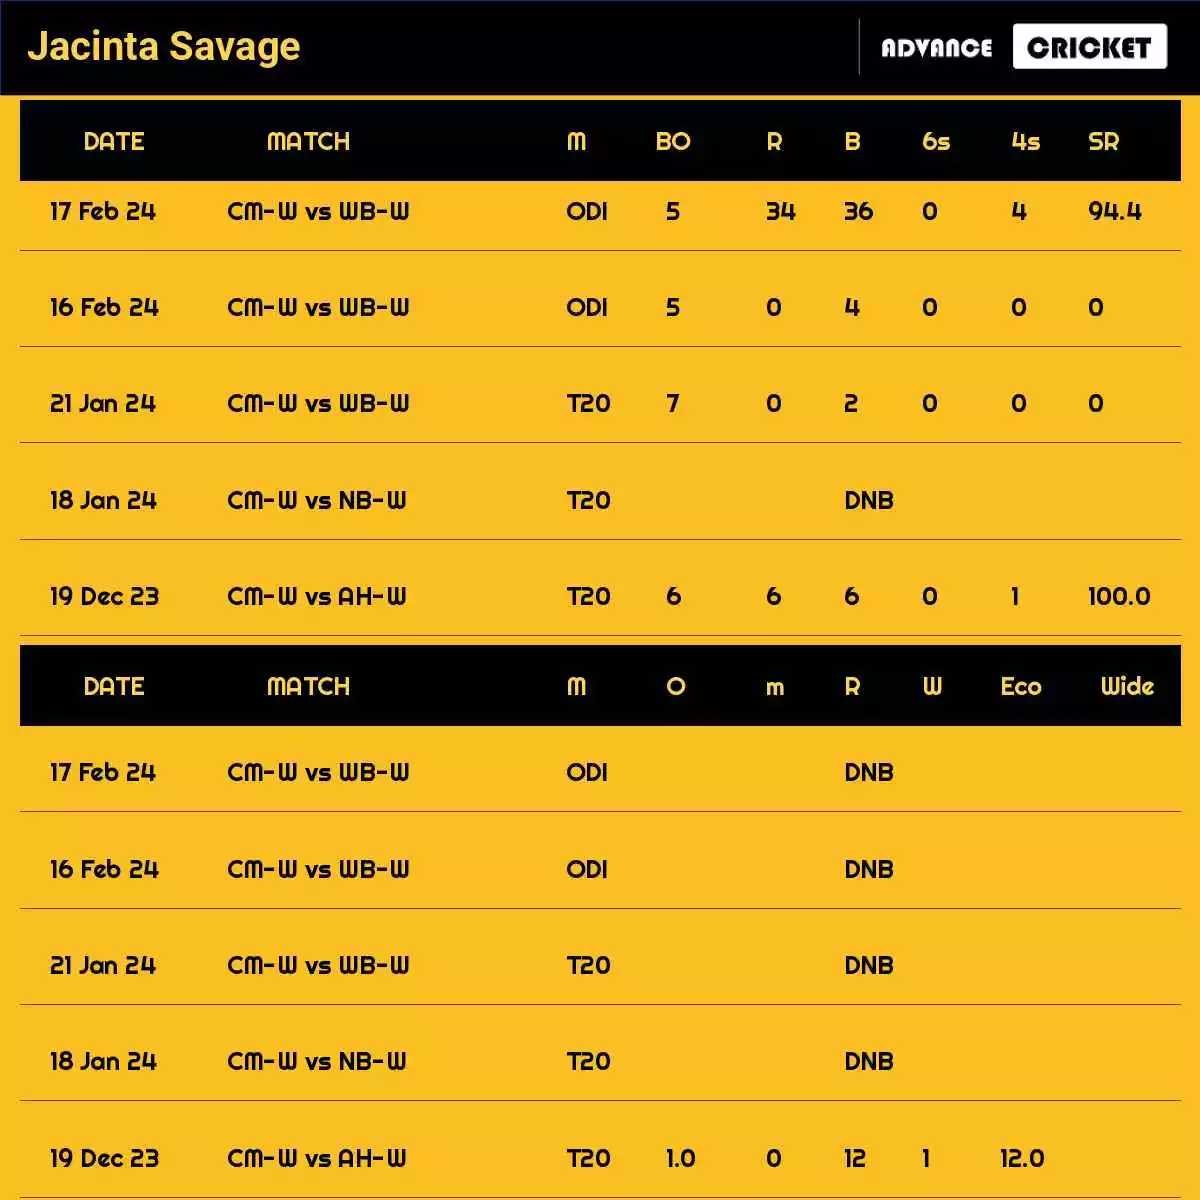 Jacinta Savage Recent Matches Details Date Wise